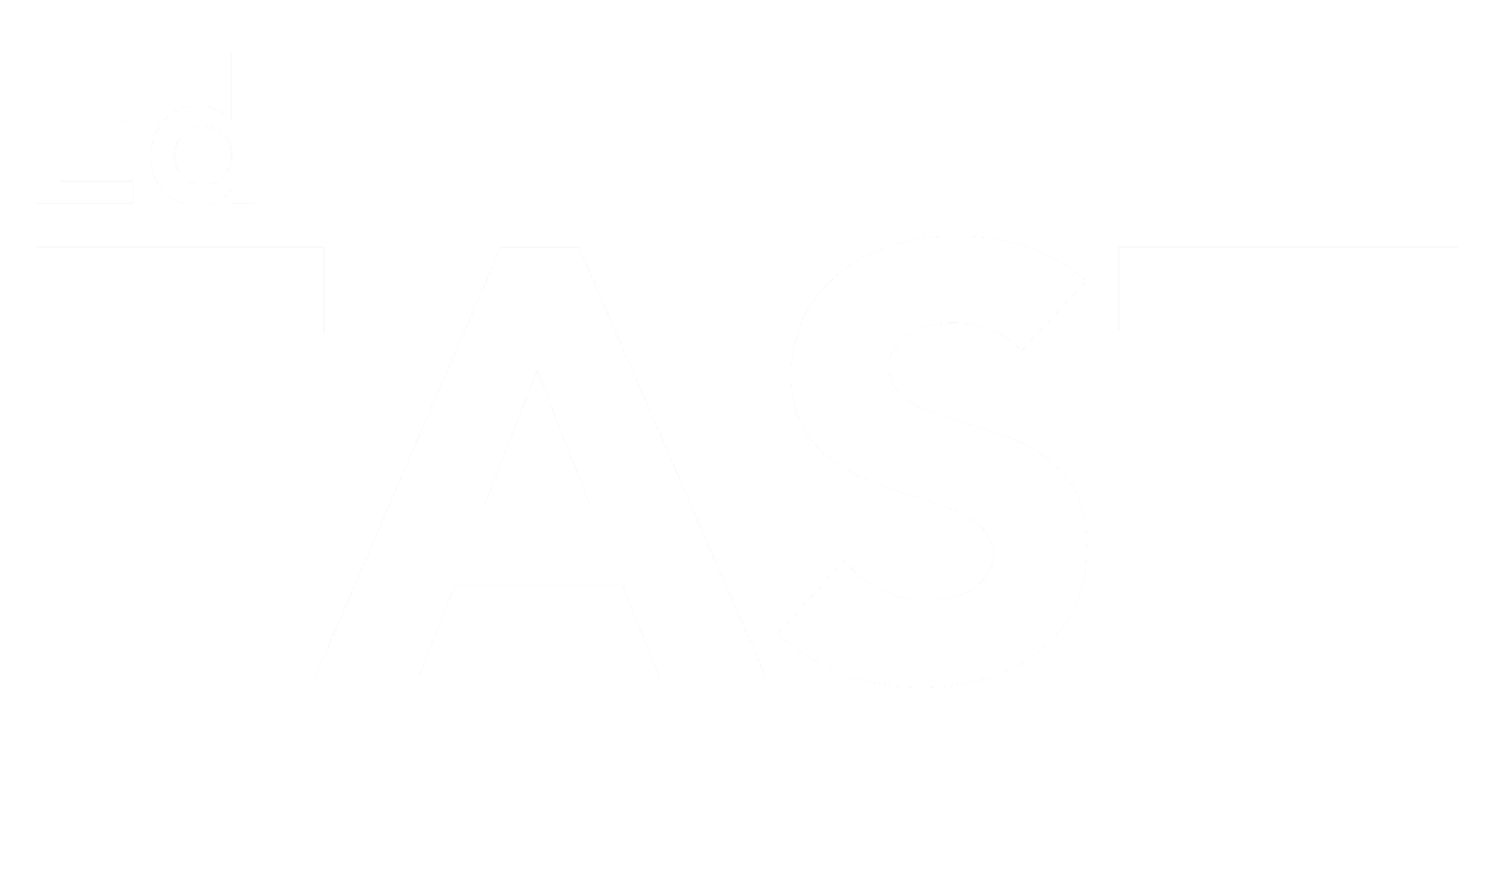 Ed Fast Abbotsford MP 